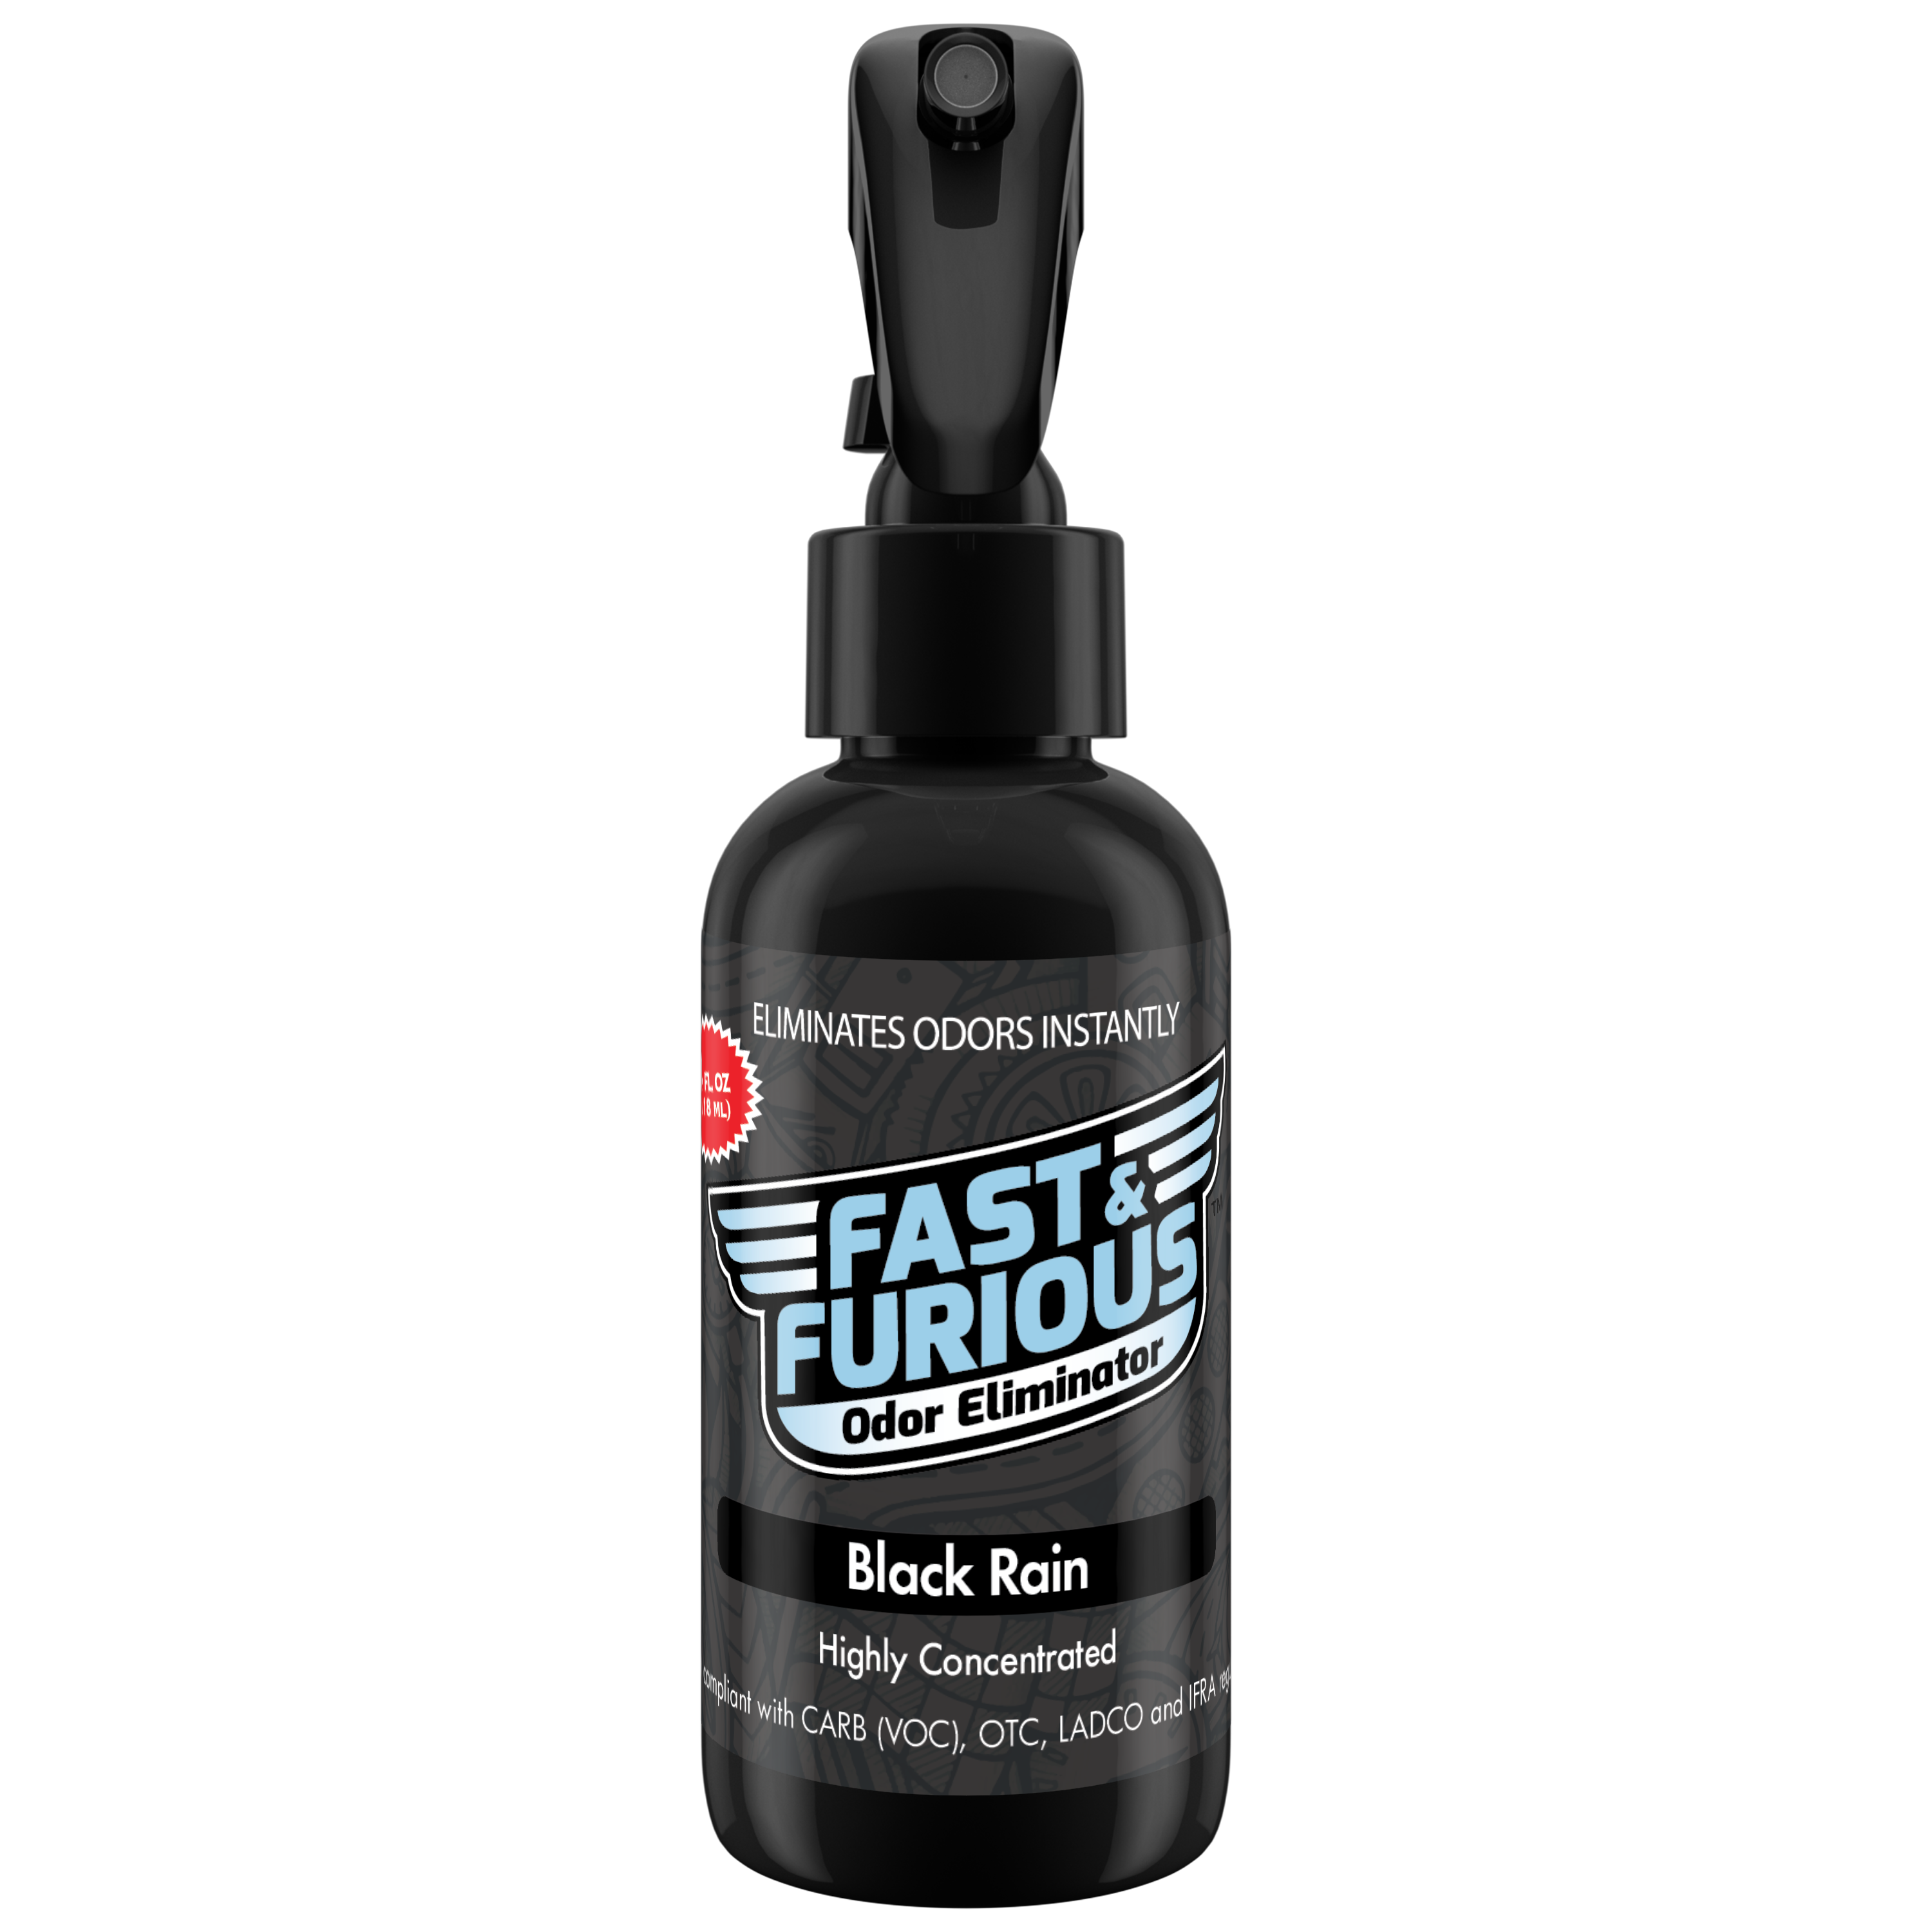 Fast and Furious Odor Eliminator - Black Rain Scent